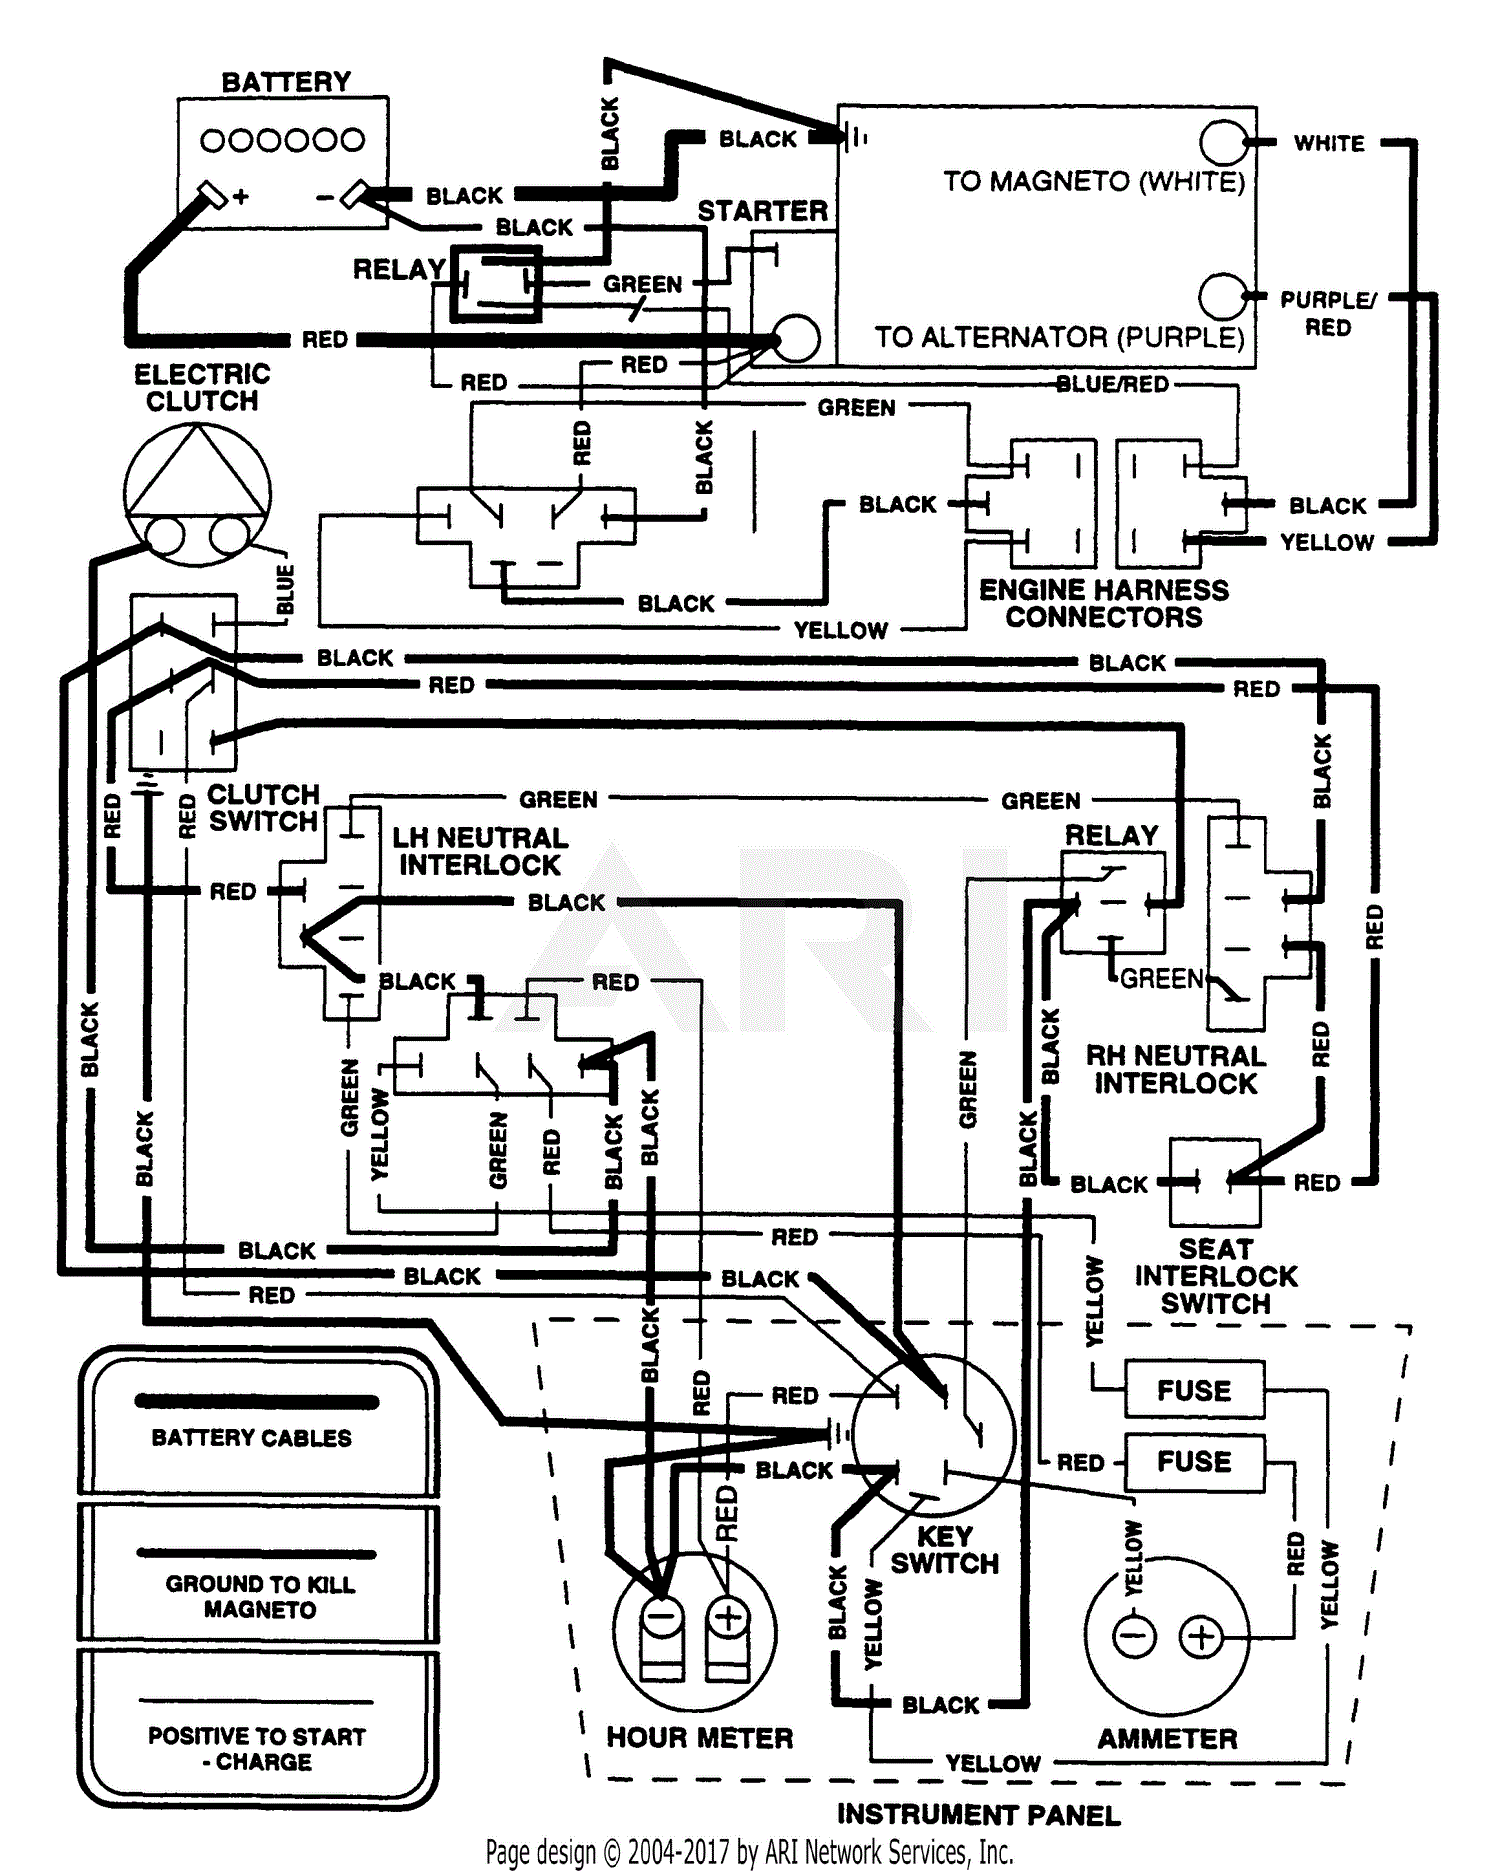 Kohler Command Pro 14 Wiring Diagram from az417944.vo.msecnd.net